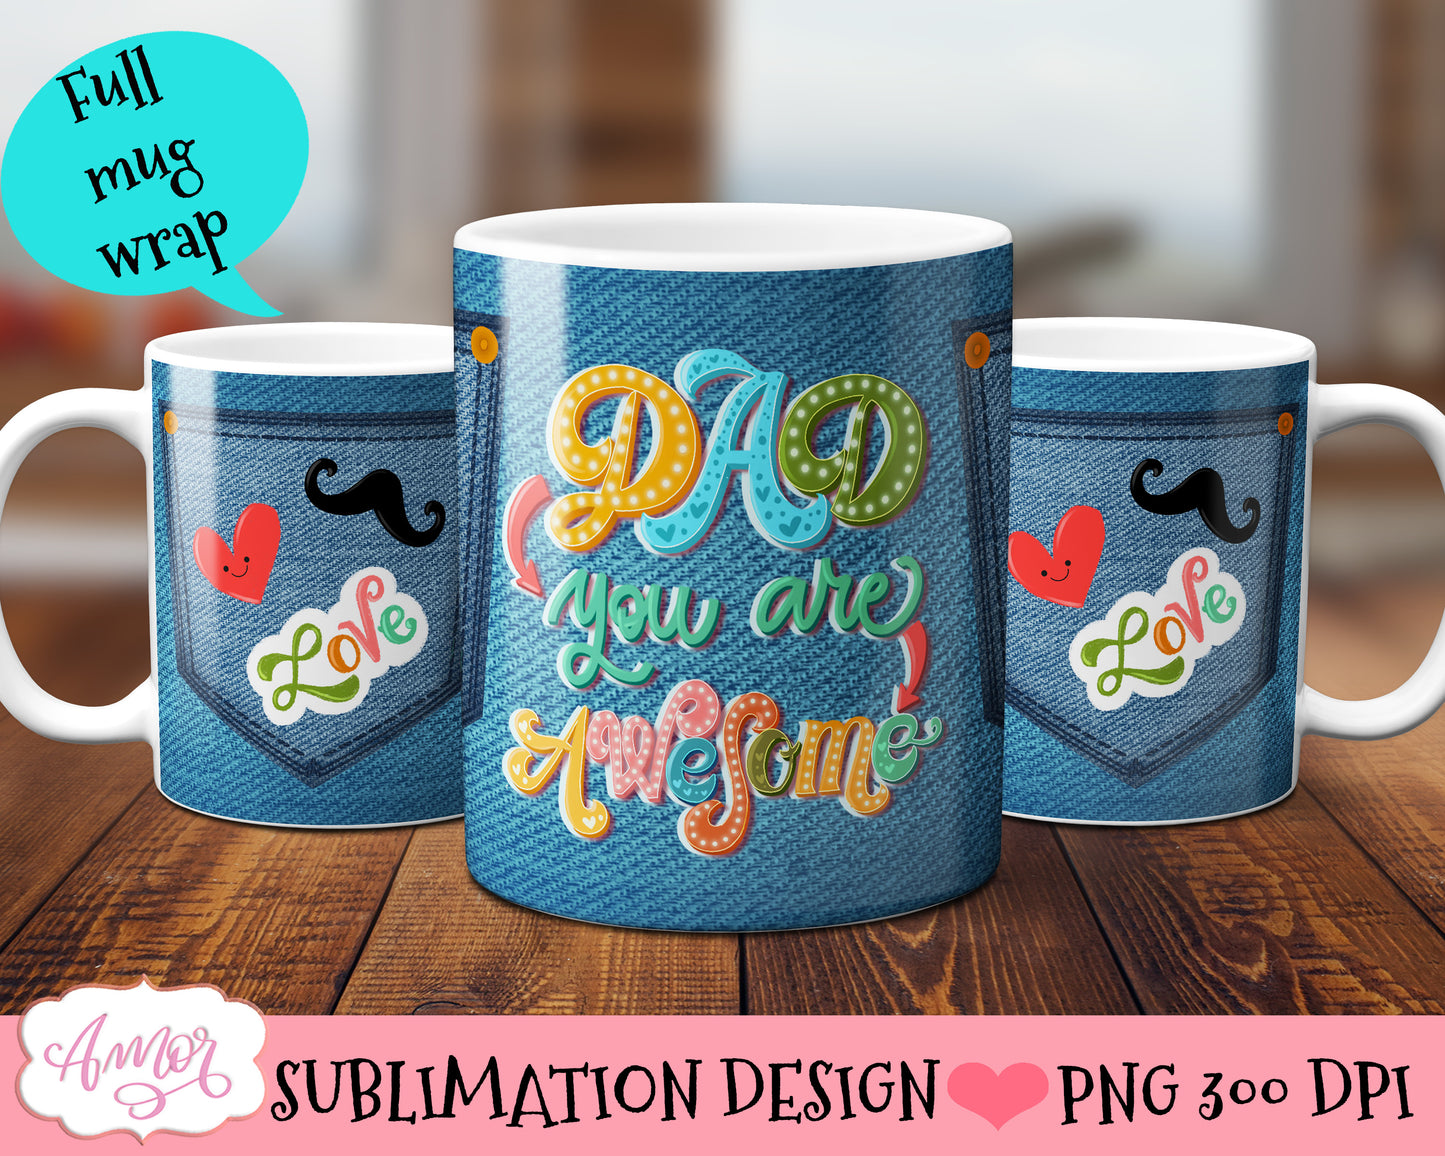 Dad mug wrap PNG for sublimation